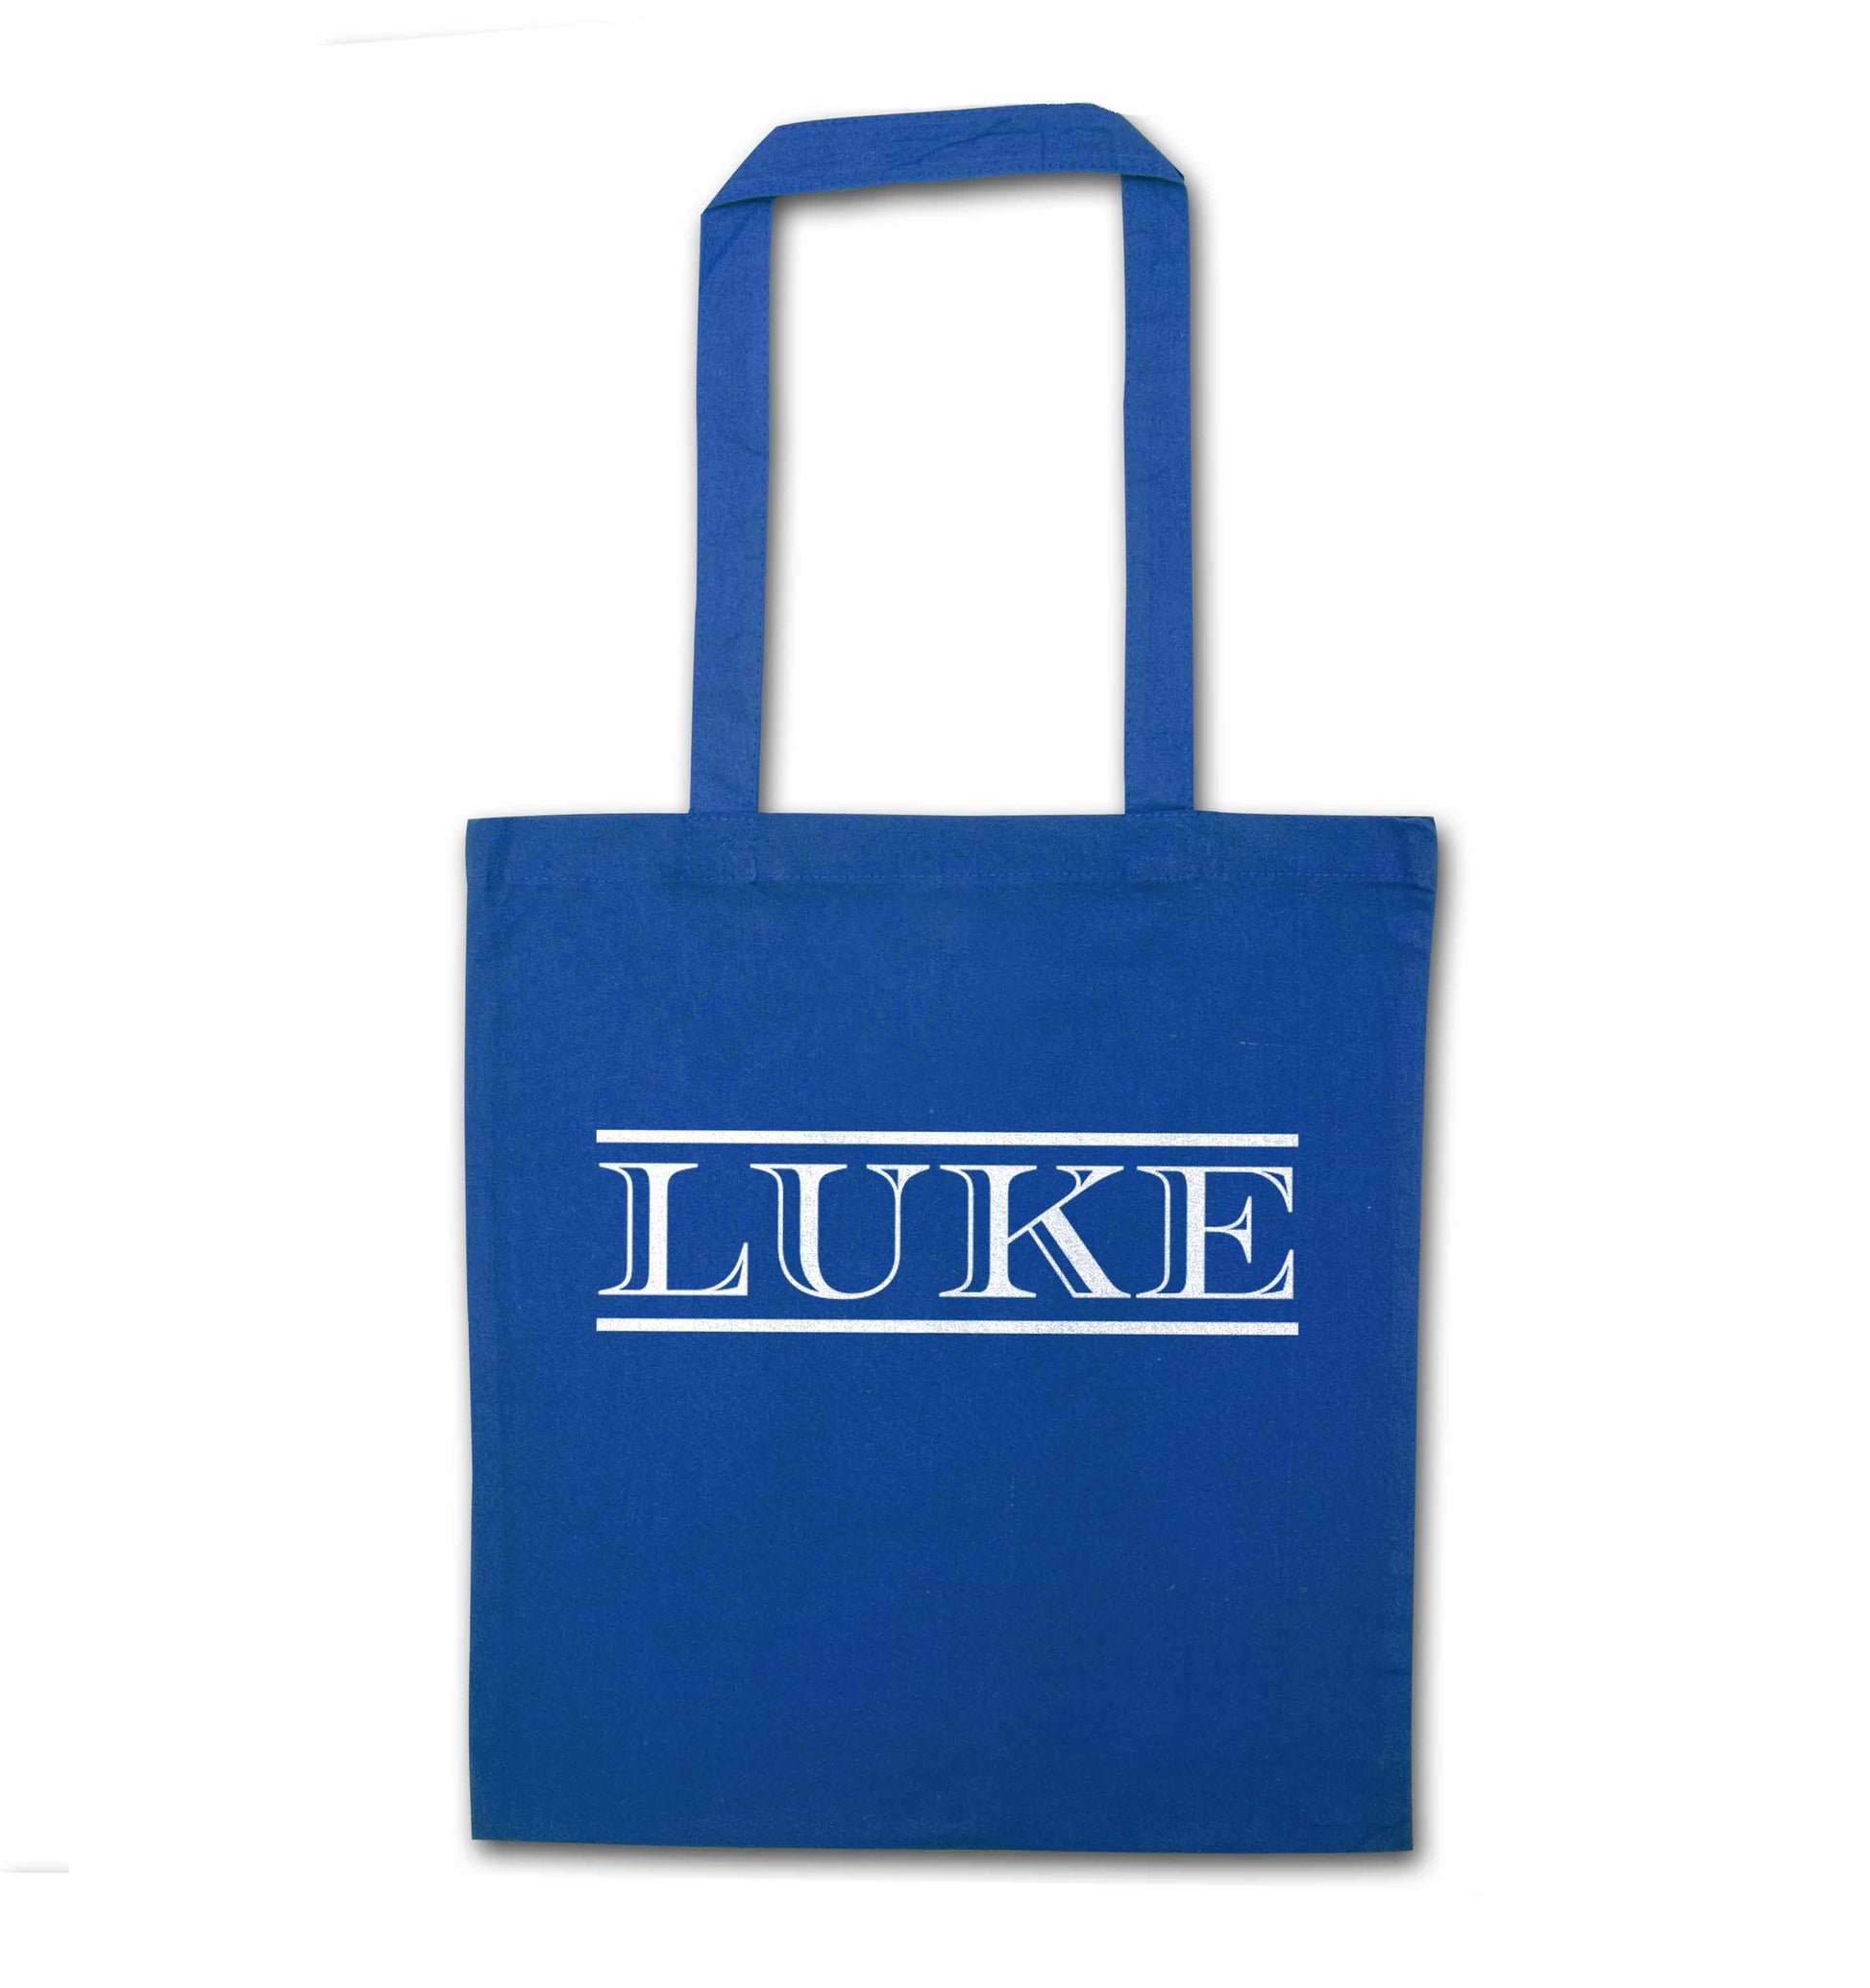 Personalised name blue tote bag